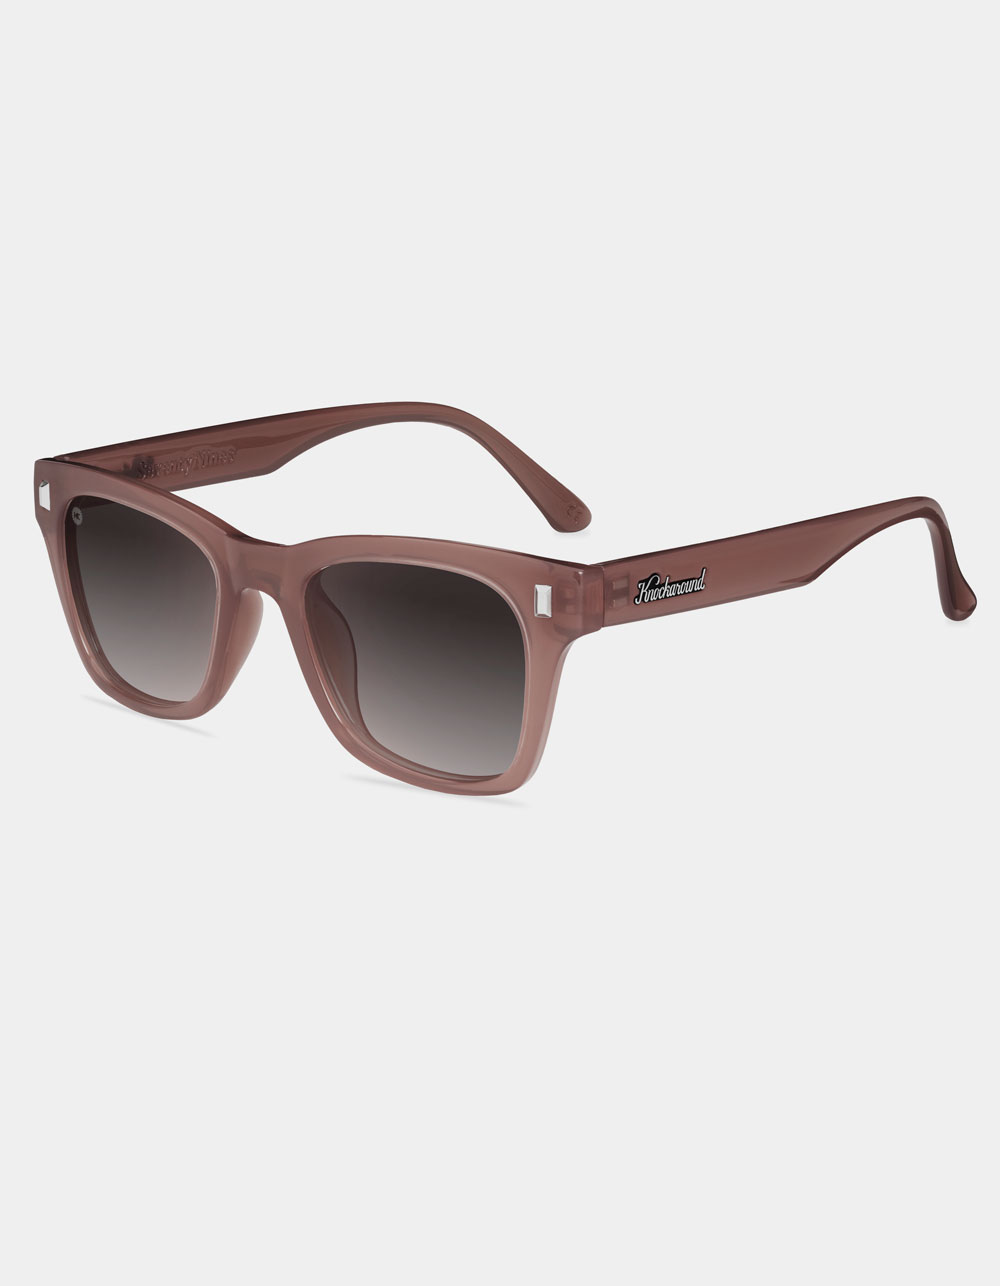 KNOCKAROUND Seventy Nines Rose Latte Polarized Sunglasses